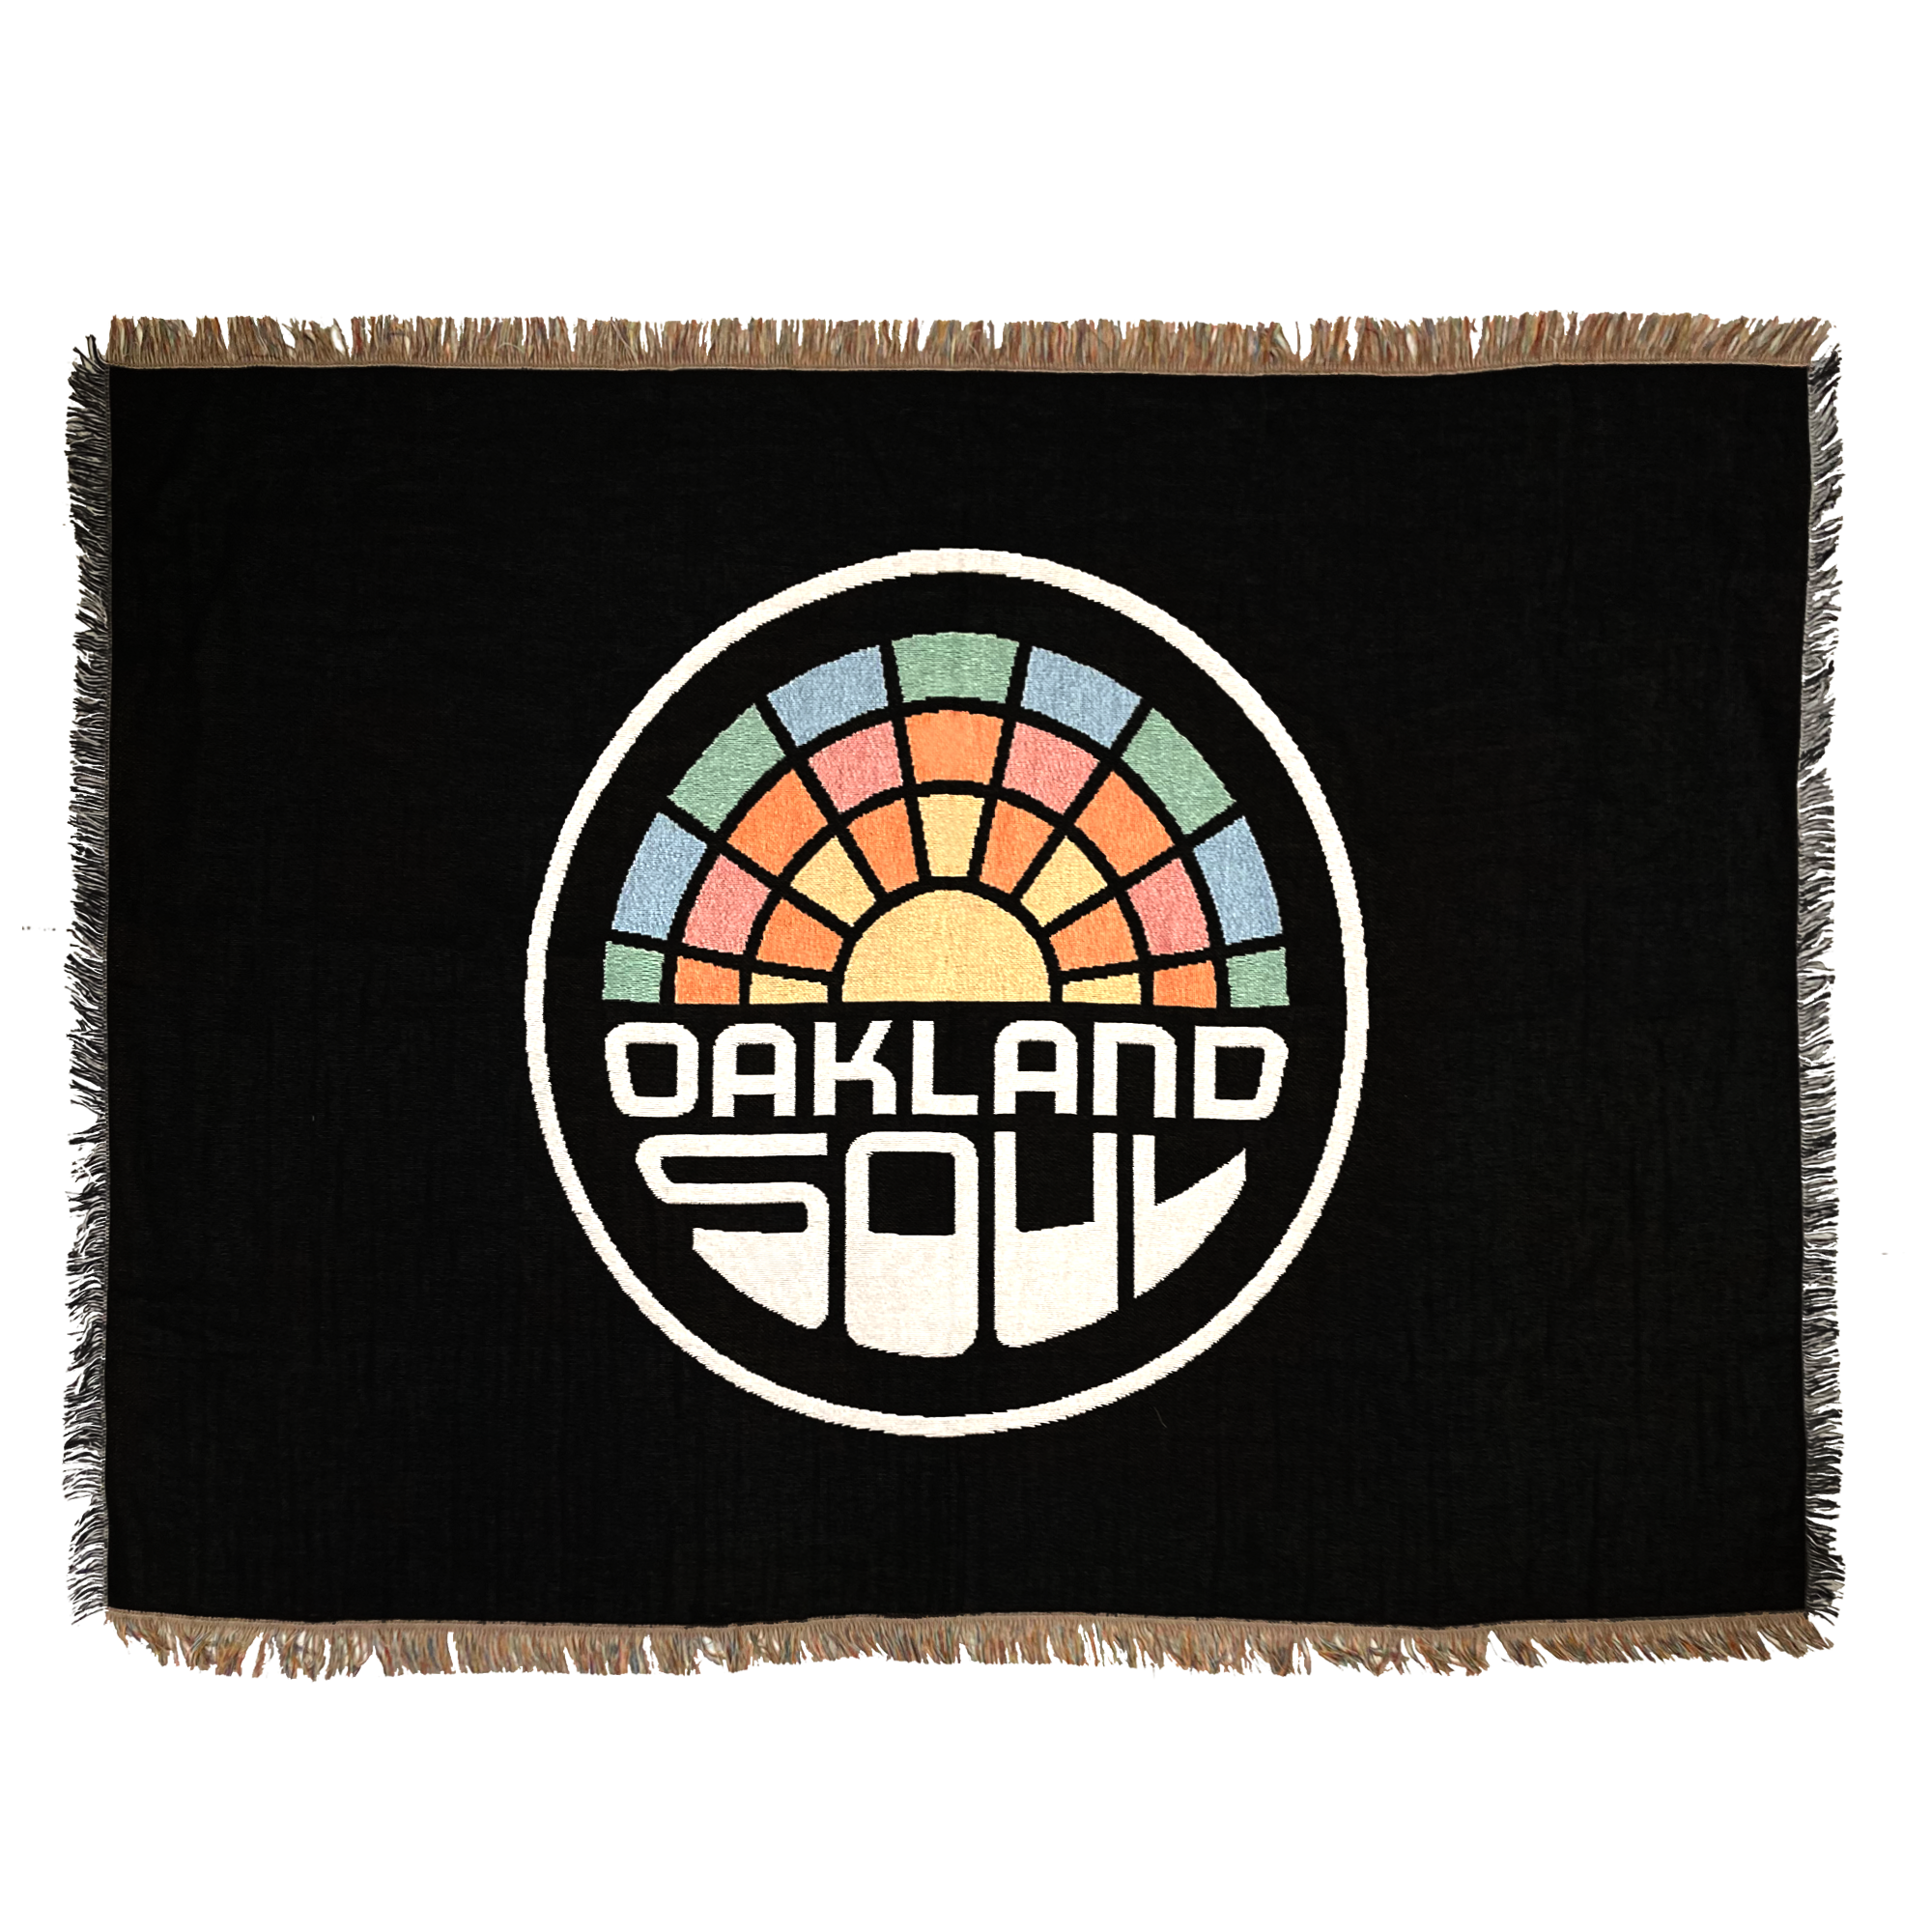 Flat  image of Oakland Soul throw blanket.